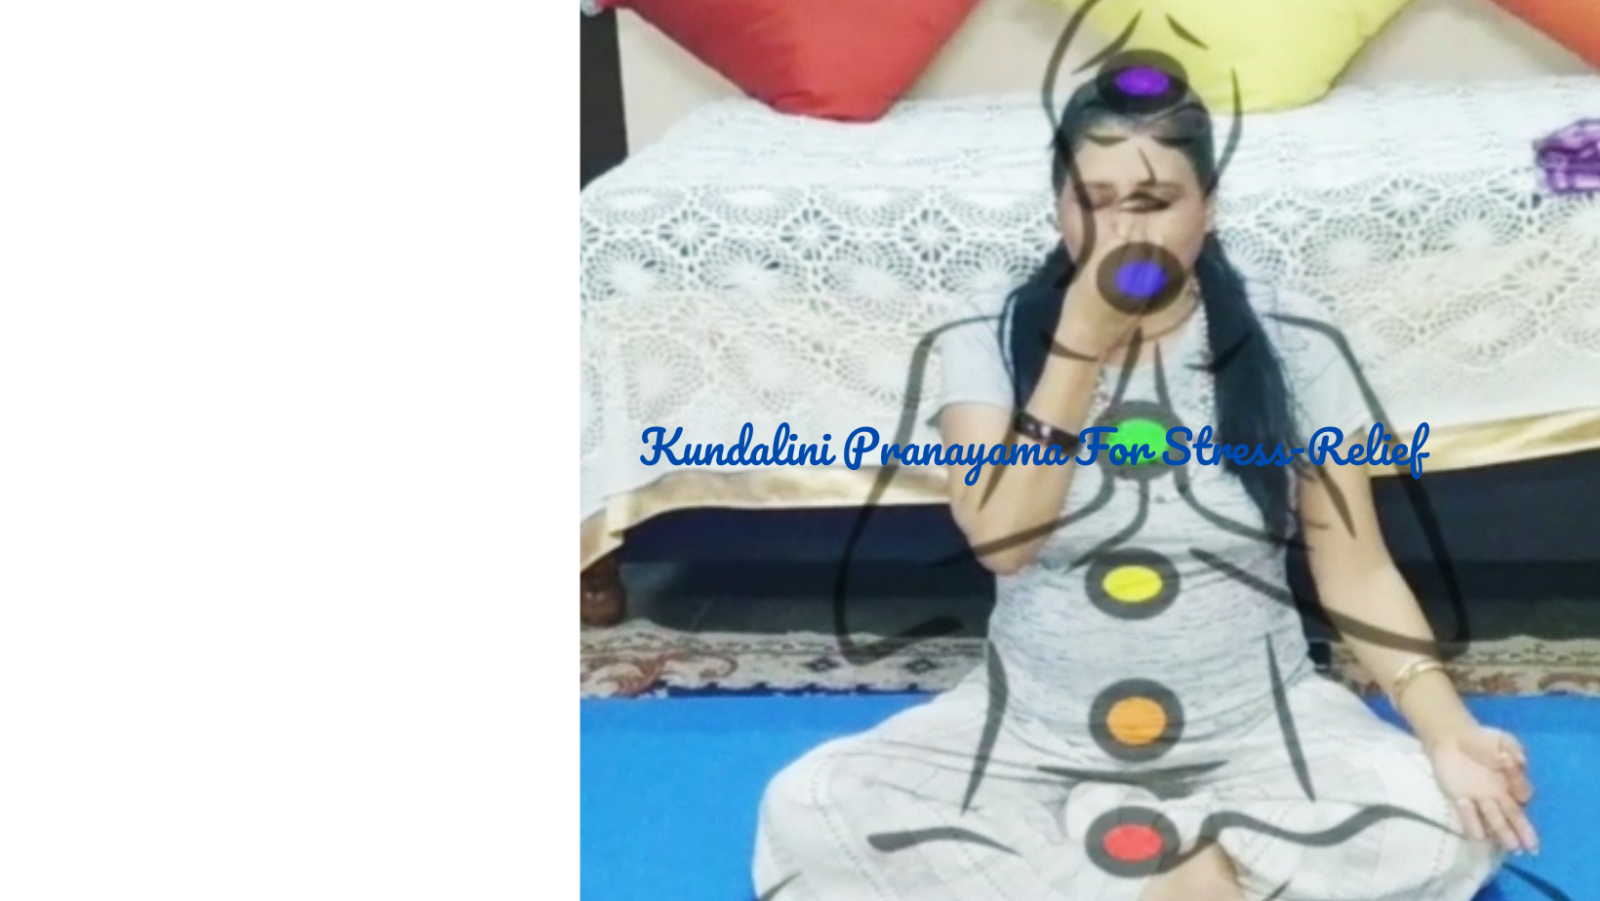 featured image: Kundalini Pranayama for stress relief